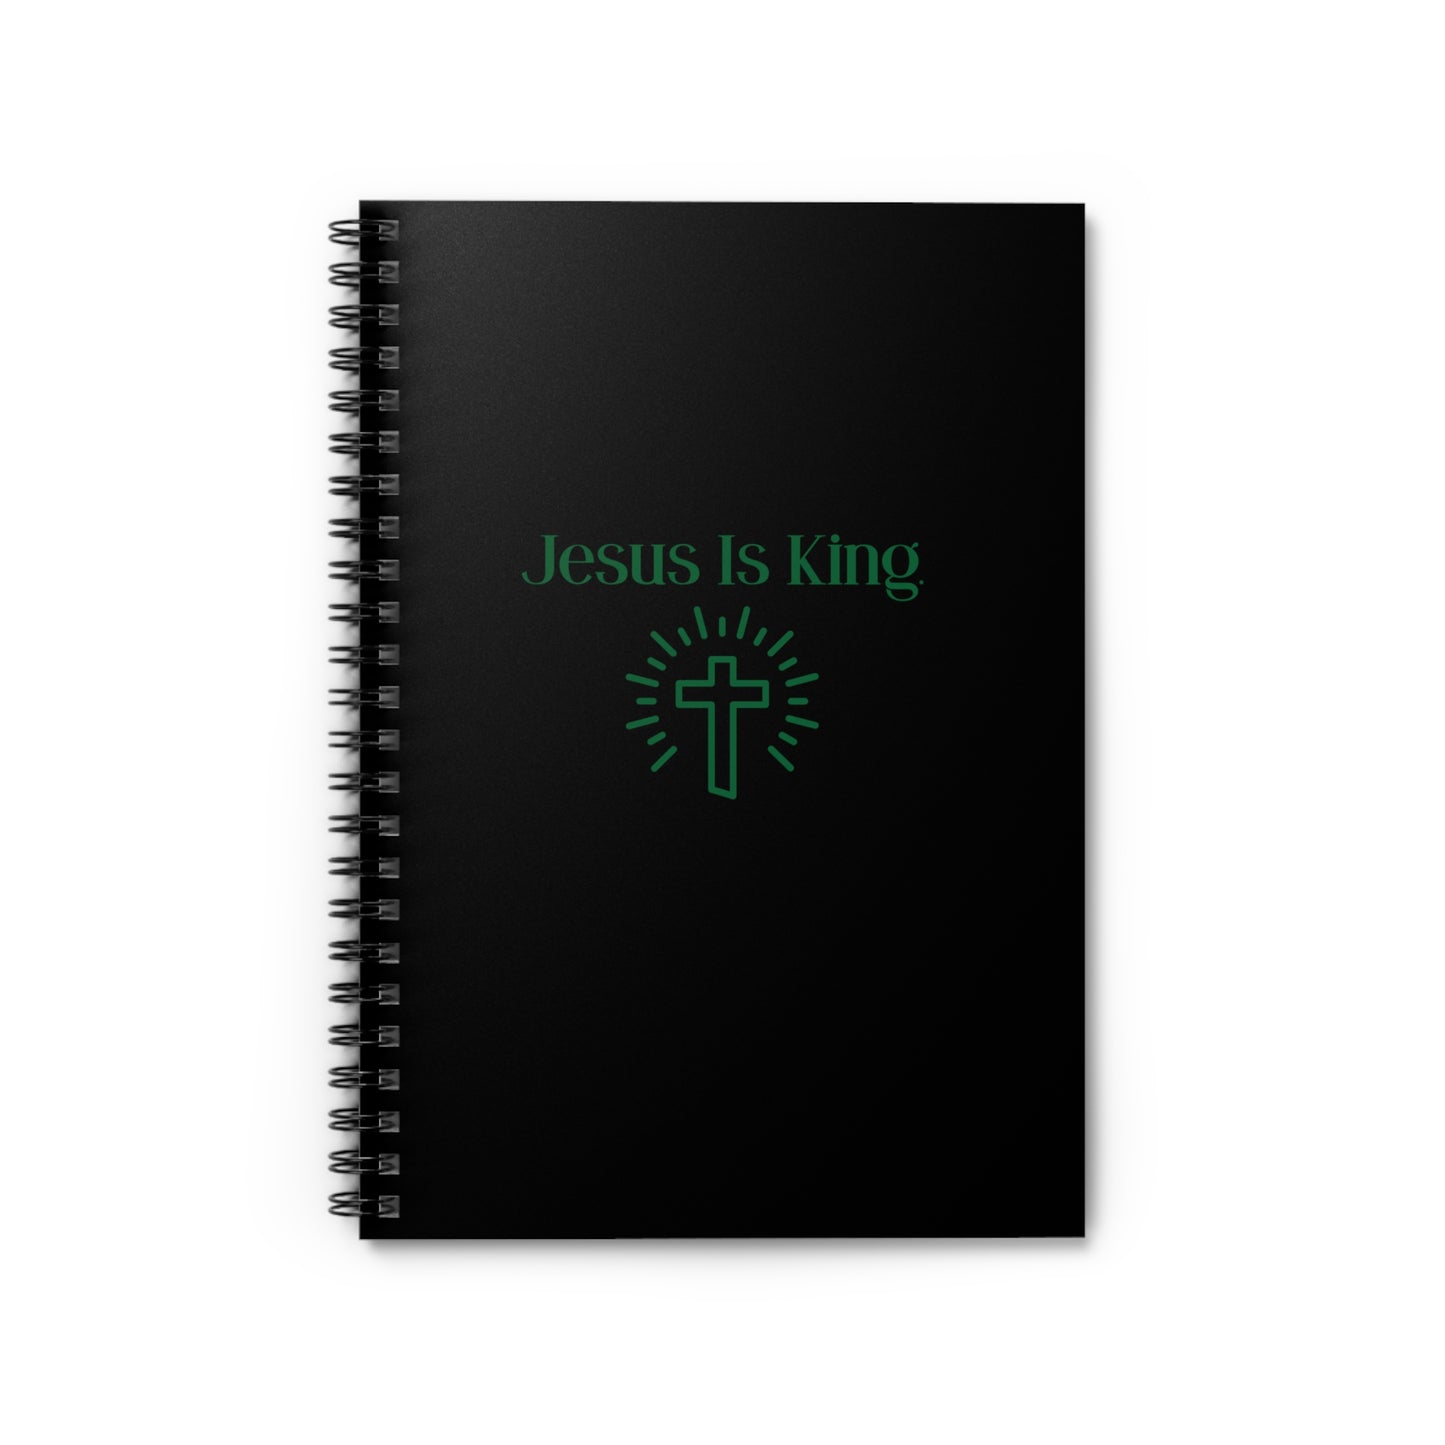 Jesus Is King Spiral Notebook - Ruled Line